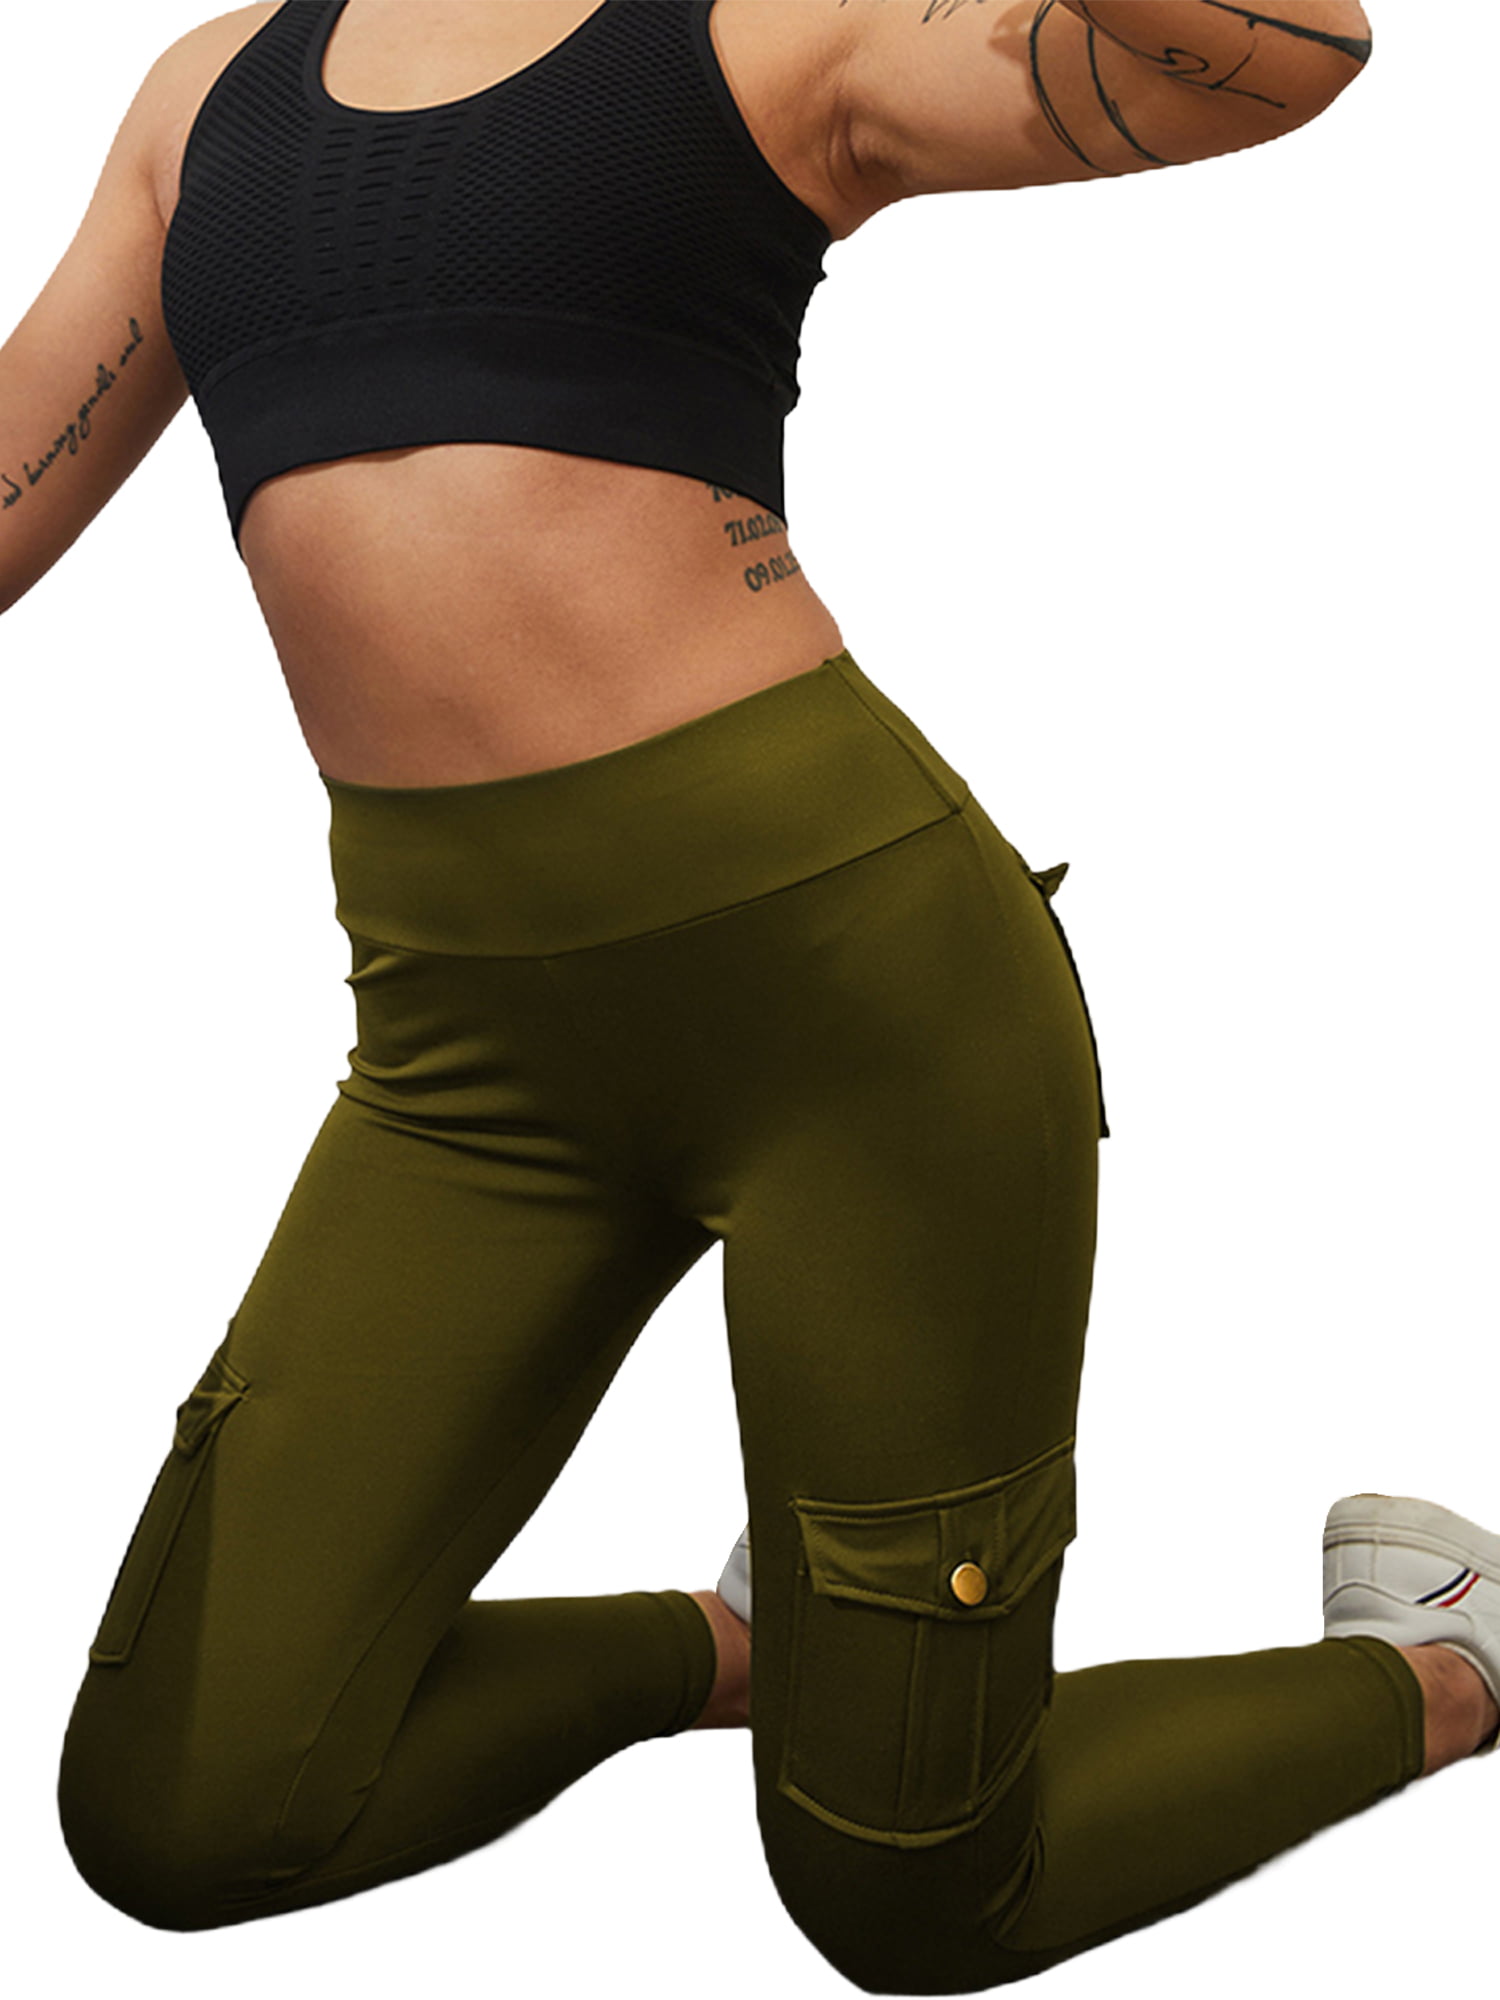 Niuer Womens High Waist Capri Yoga Pants with Pockets Moisture